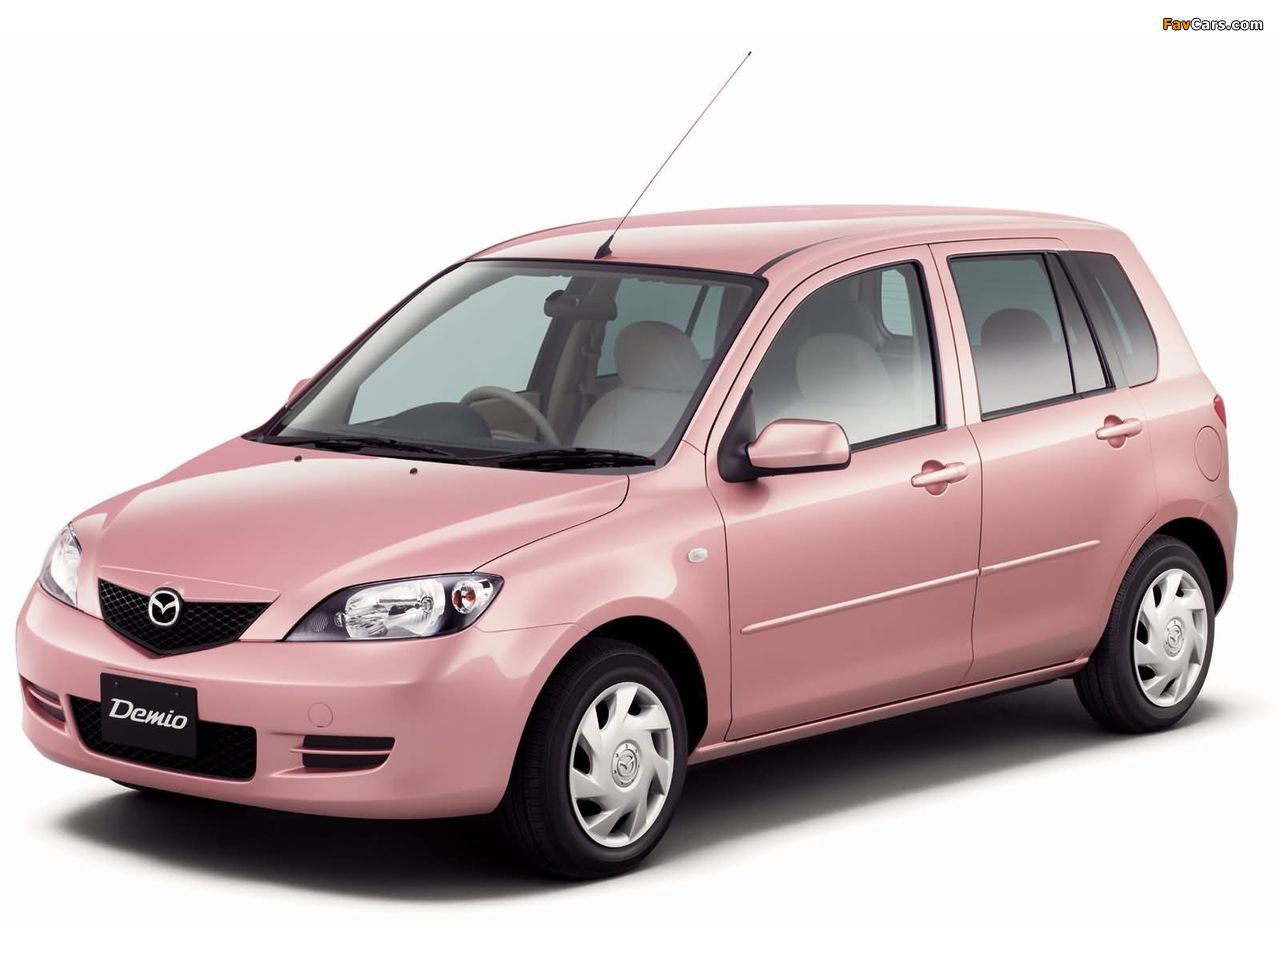 Mazda Demio Stardust Pink (DY3W) 2003 pictures (1280 x 960)